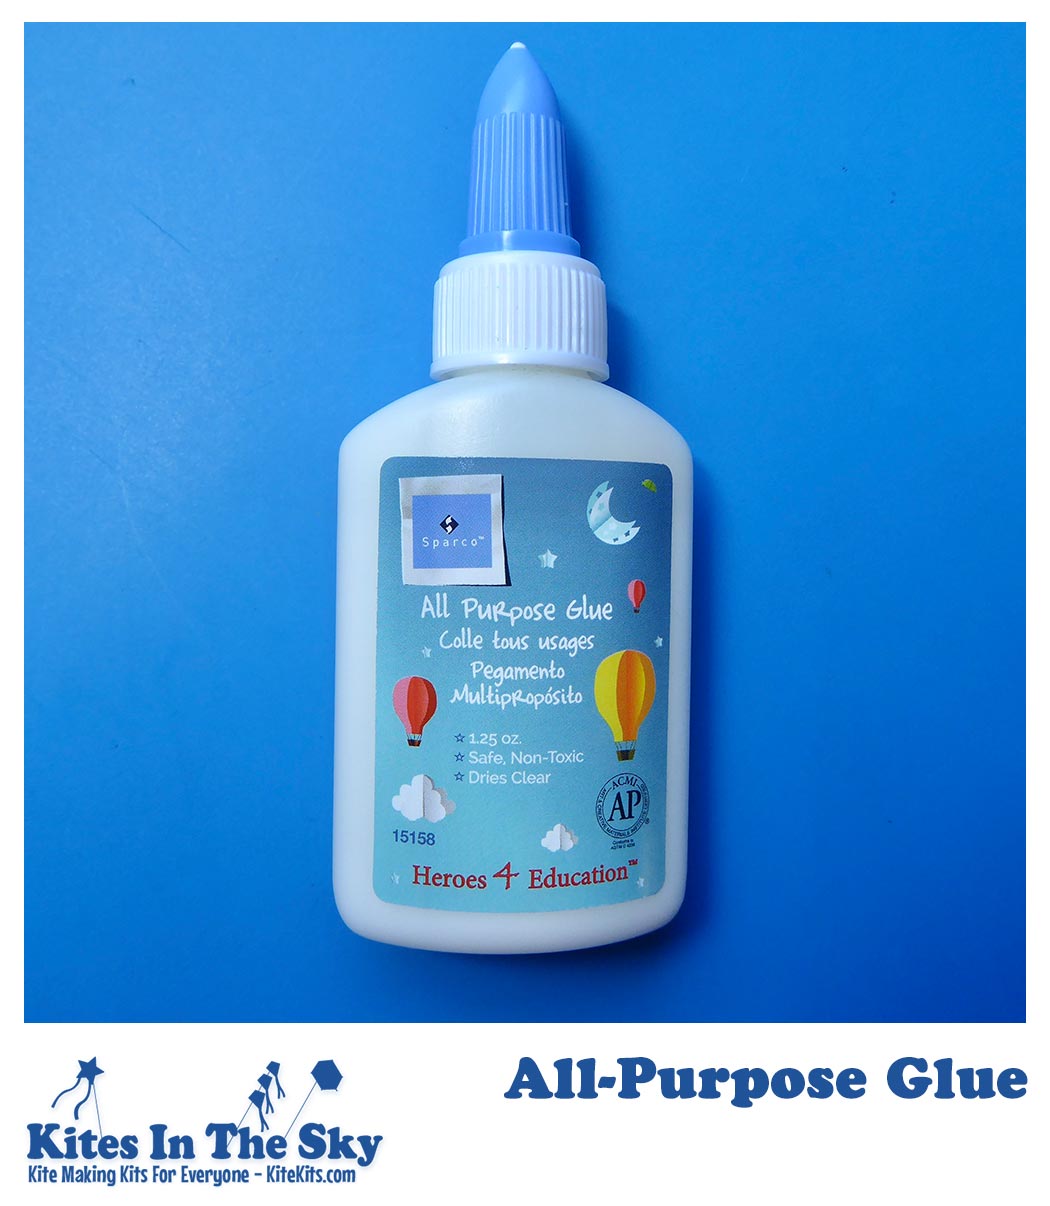 All-Purpose Glue